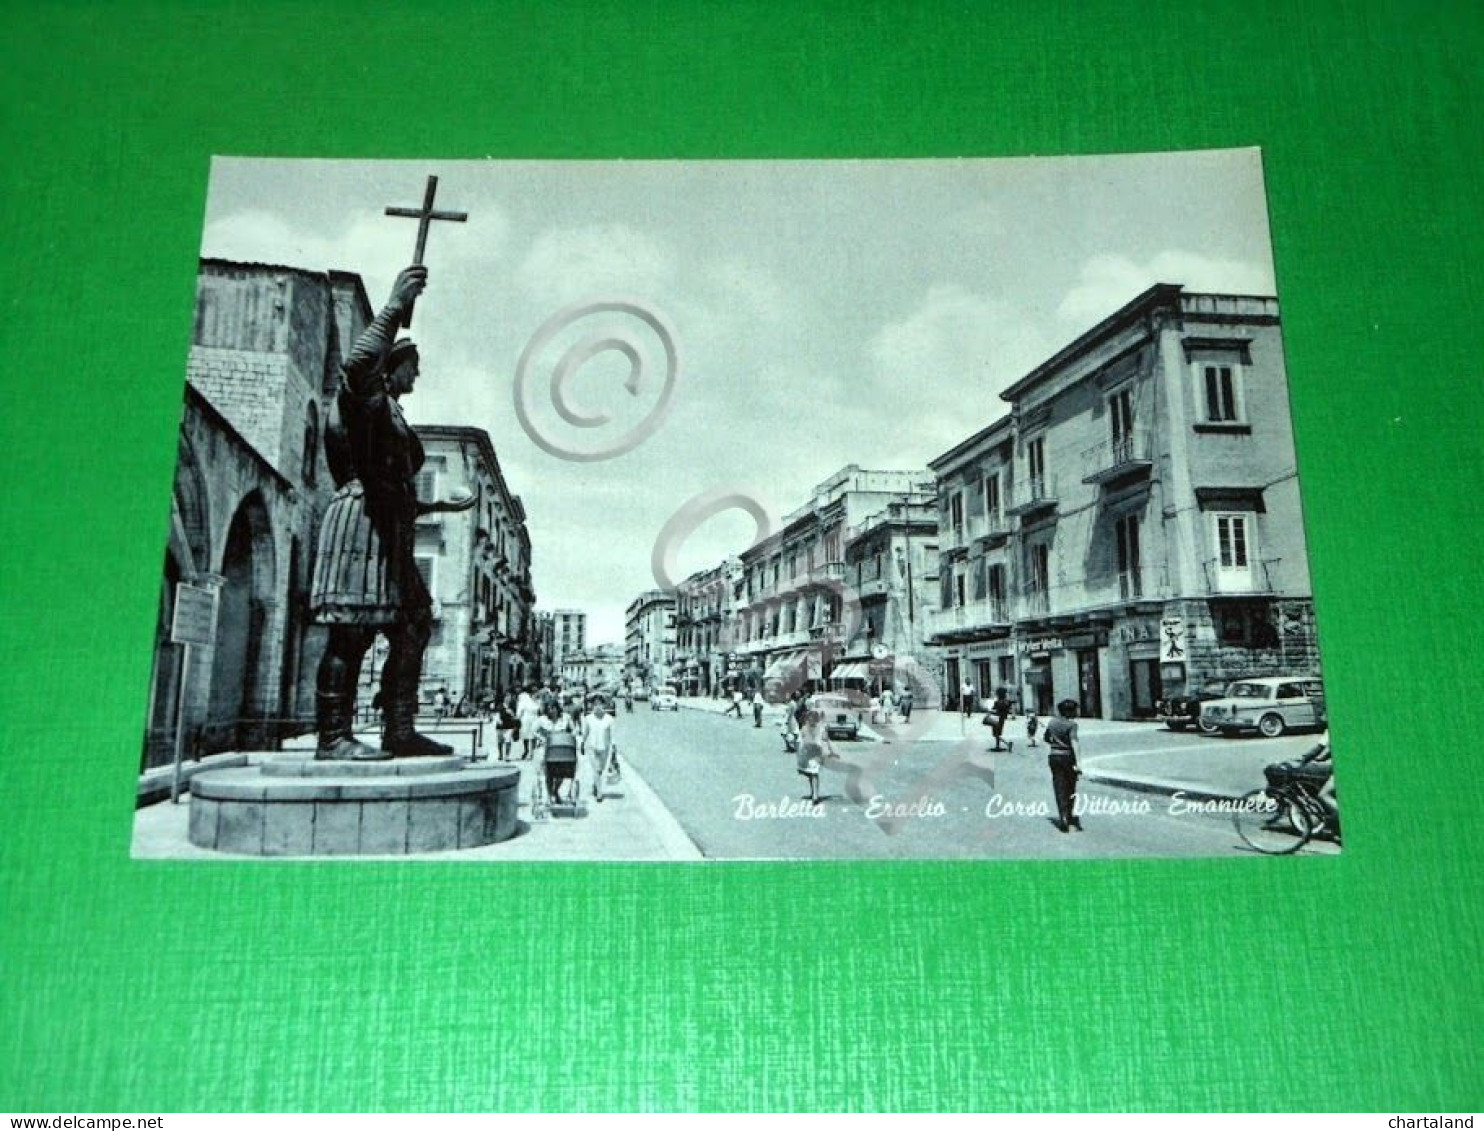 Cartolina Barletta - Eraclio - Corso Vittorio Emanuele 1955 Ca - Bari